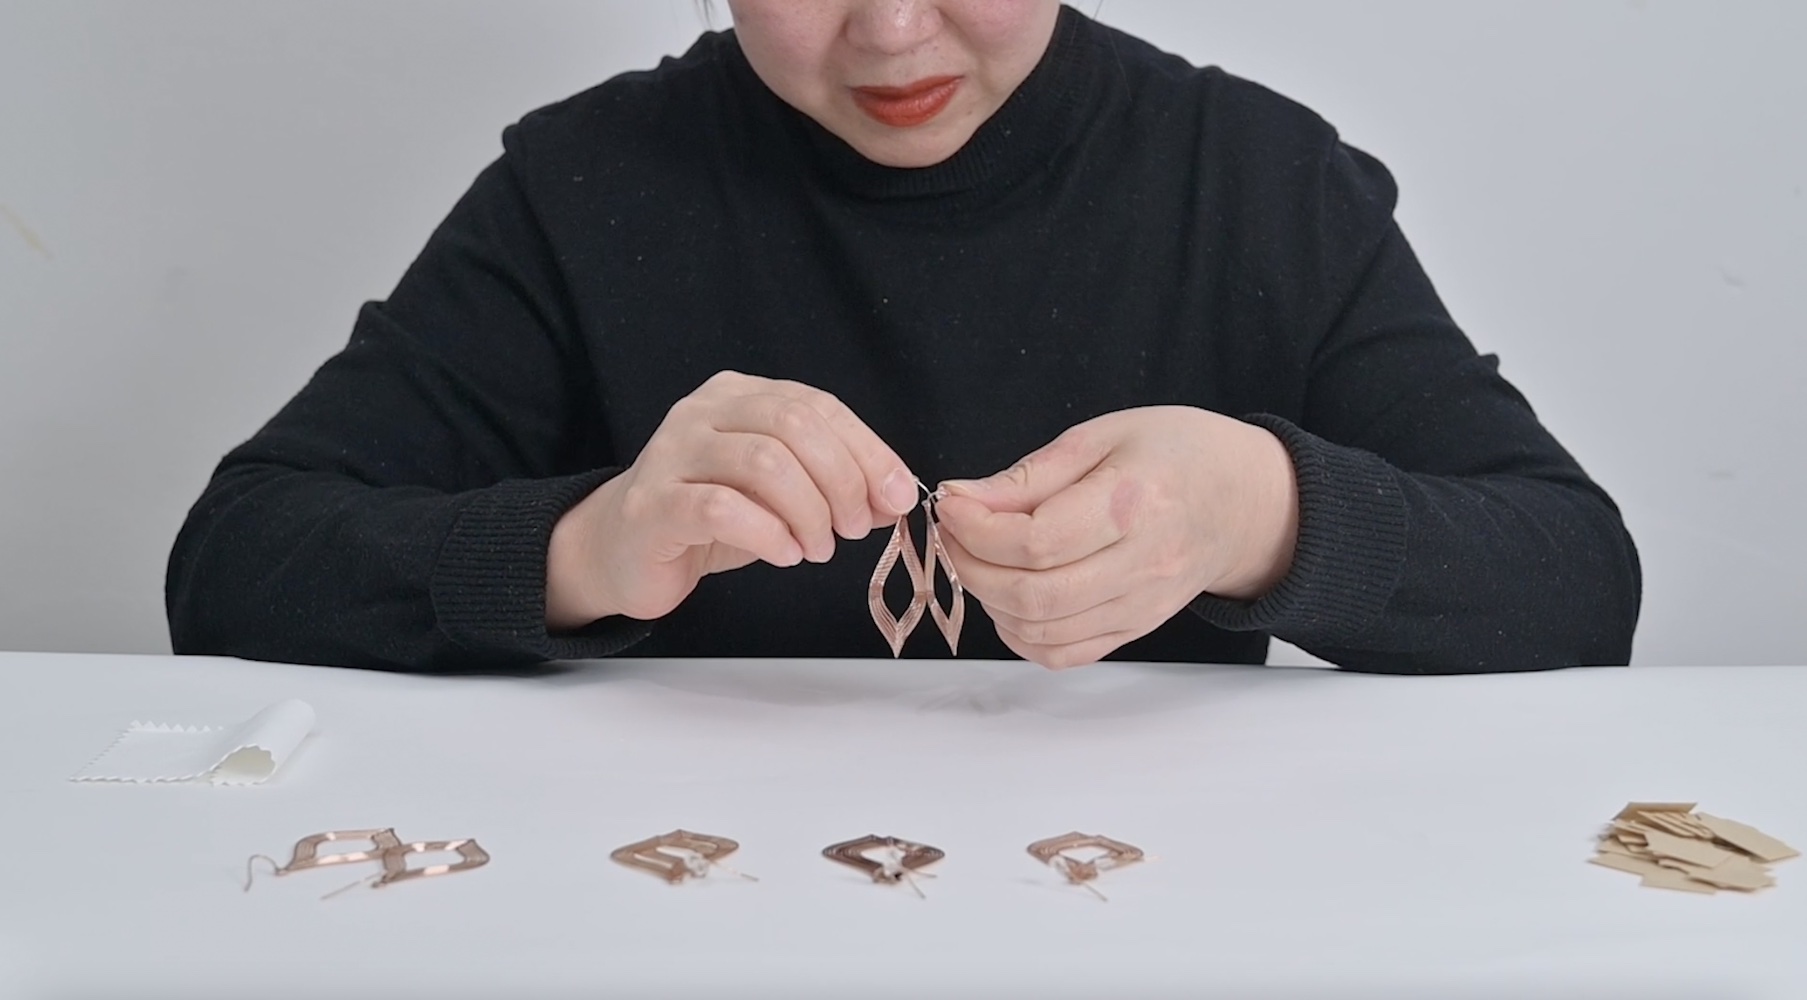 Lan, Sex Trafficking Survivor and Rose Teardrop Earrings Artisan in East Asia